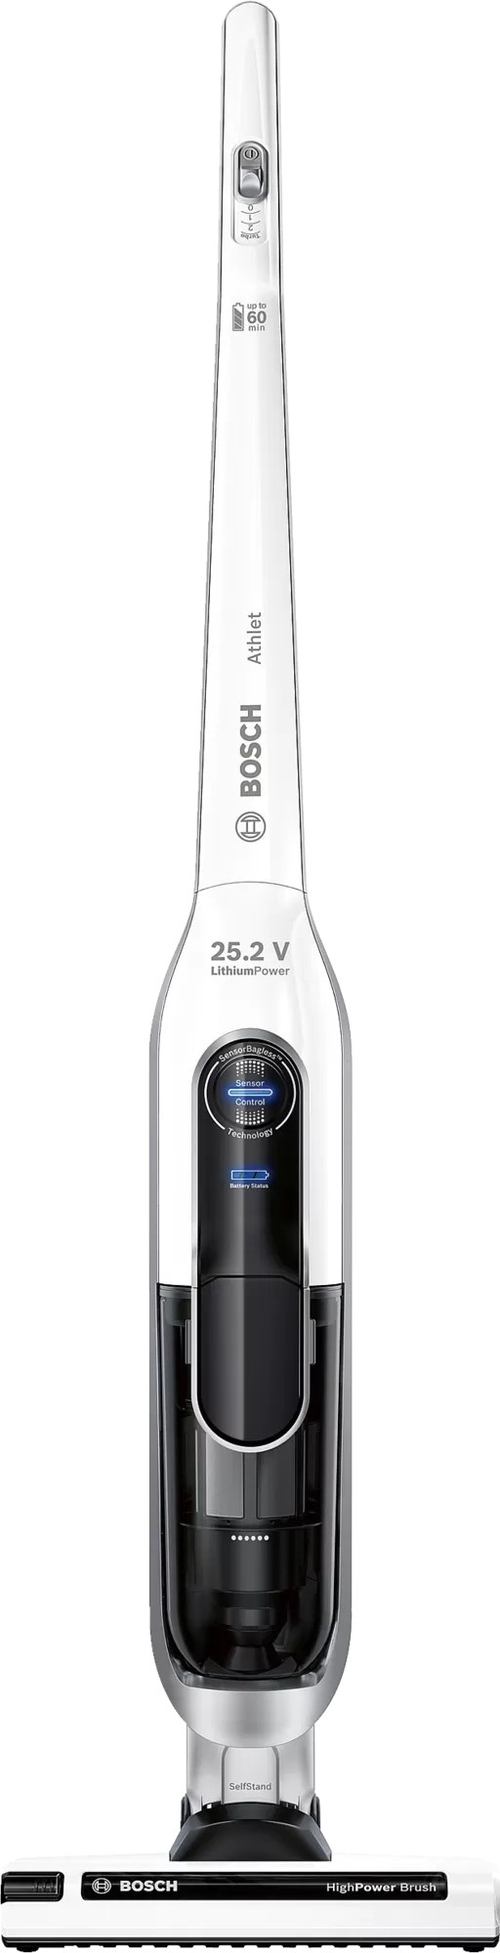 BOSCH BBH-625W60 Blanco - Aspiradora de Escoba 25.2V